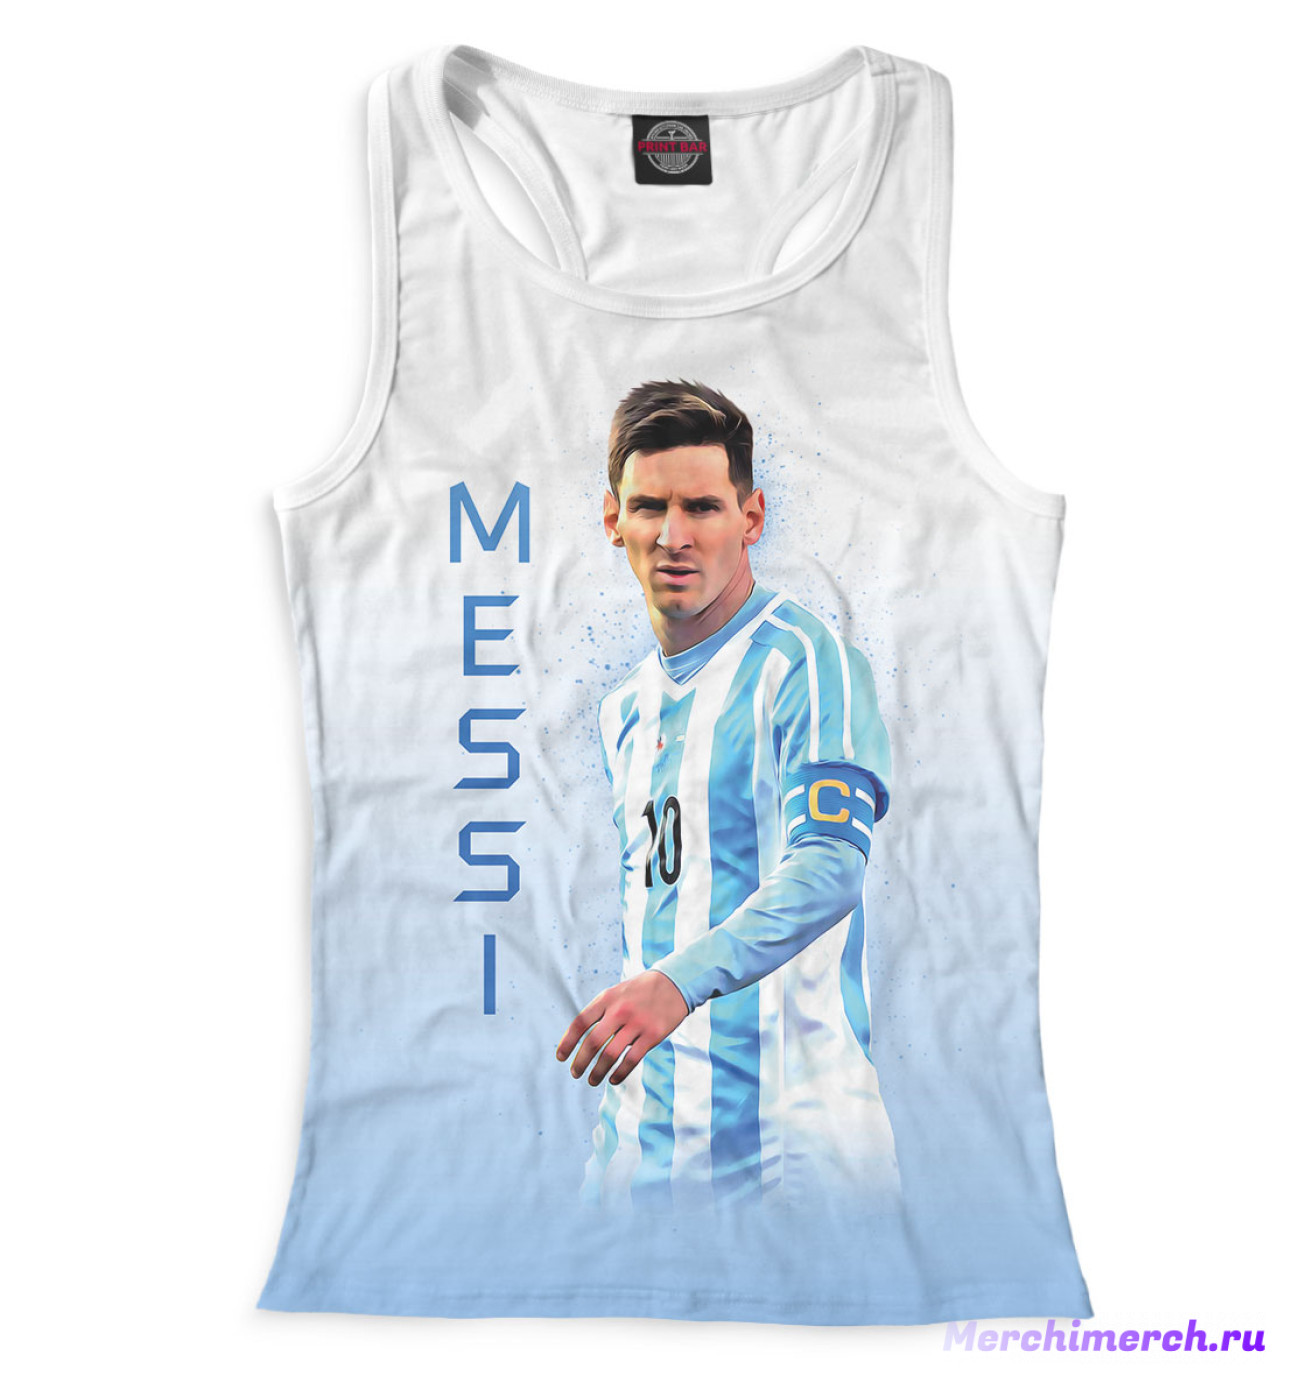 Женская Борцовка Lionel Messi, артикул: FLT-971474-mayb-1